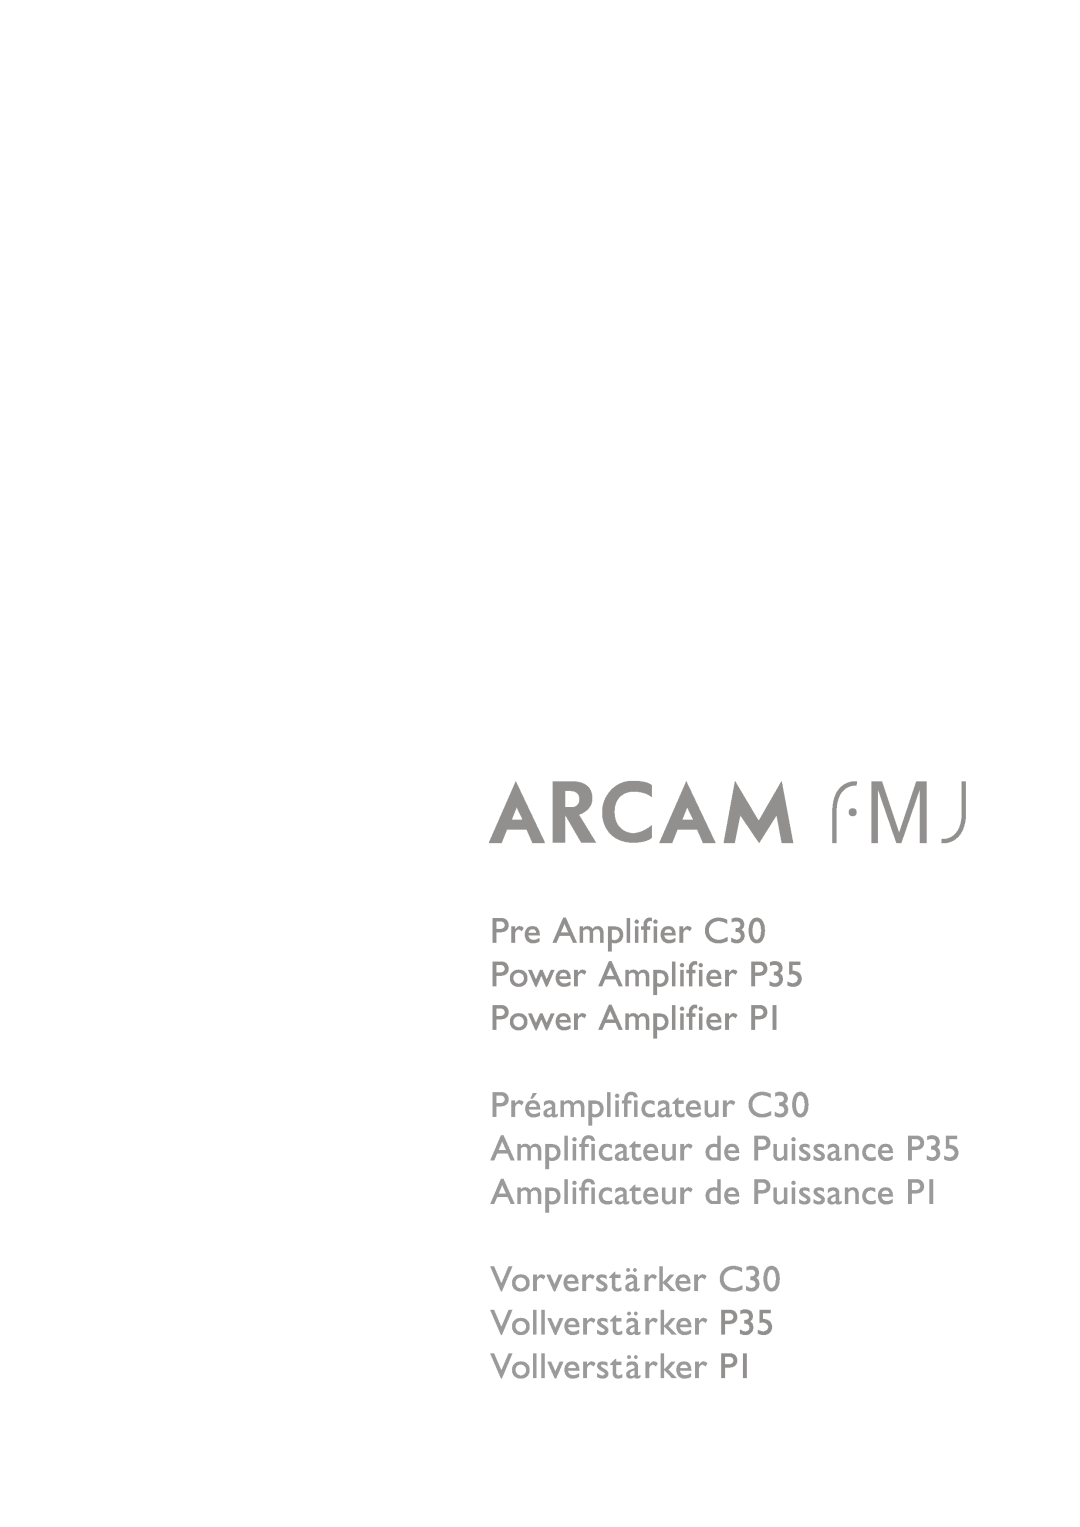 Arcam C30, P35, P1 manual Pre Amplifier C30 Power Amplifier P35, Power Amplifier P1, Vorverstärker C30 Vollverstärker P35 